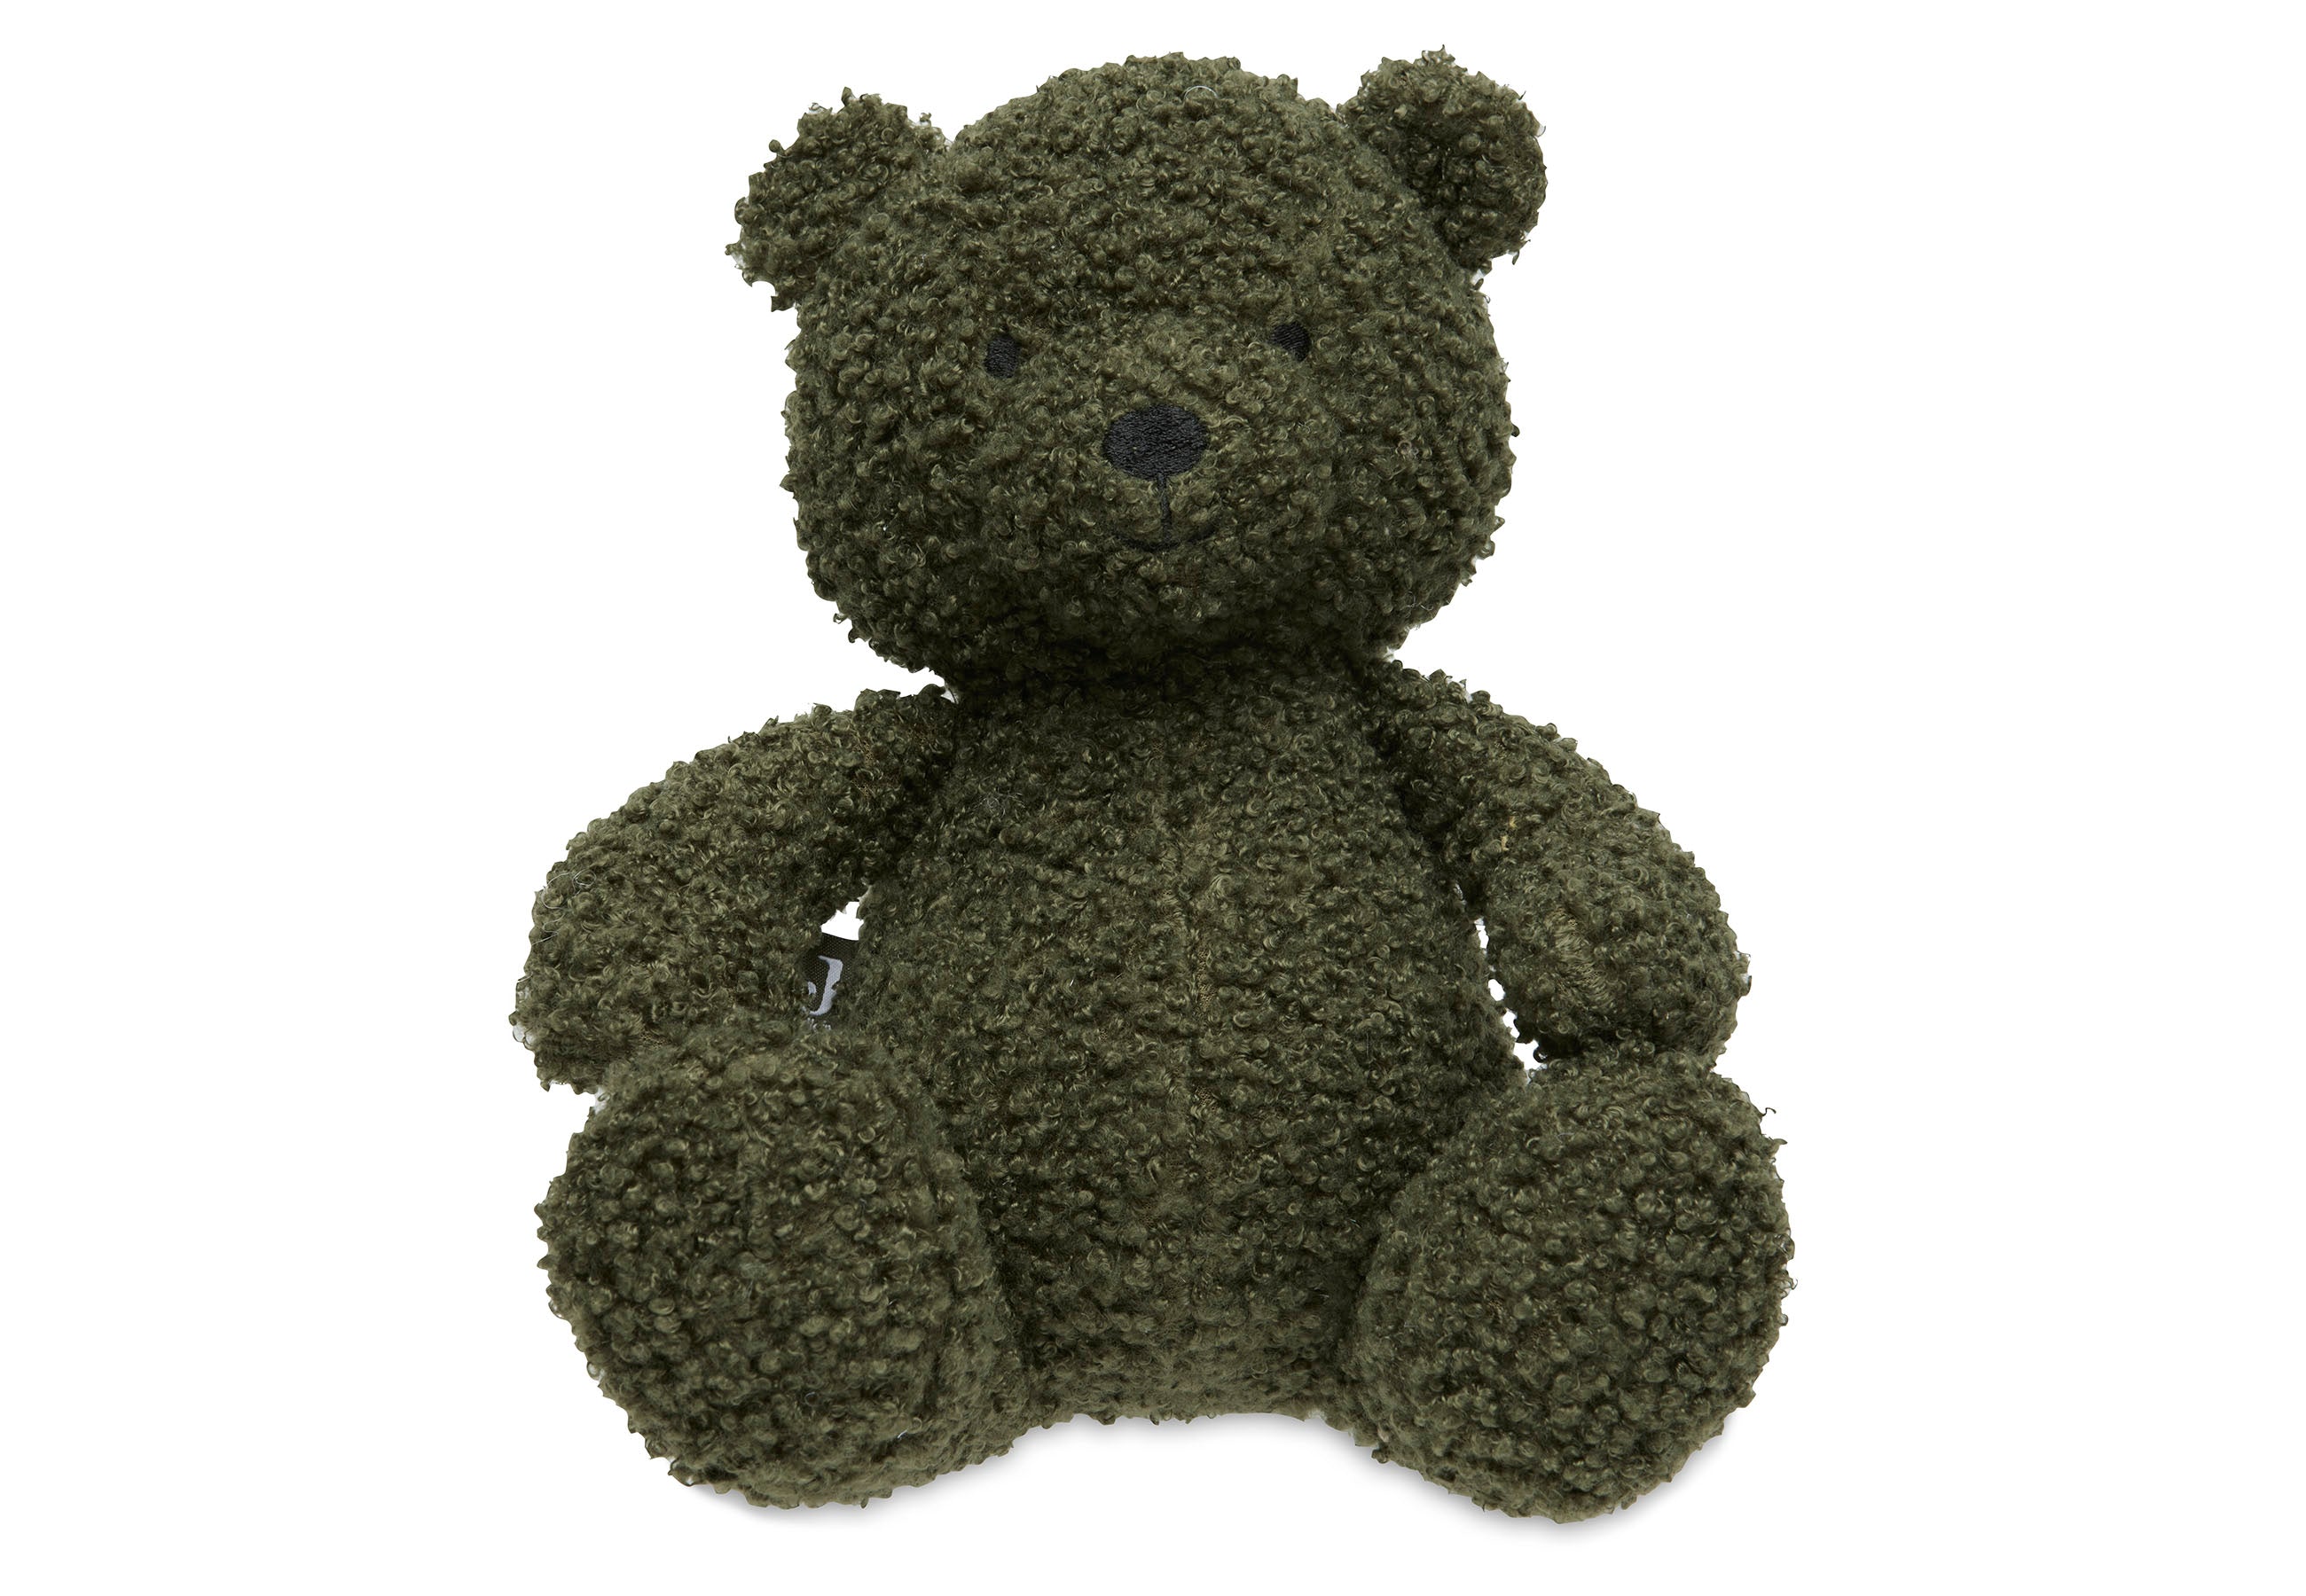 Jollein Stuffed Animal Teddy Bear - Biscuit